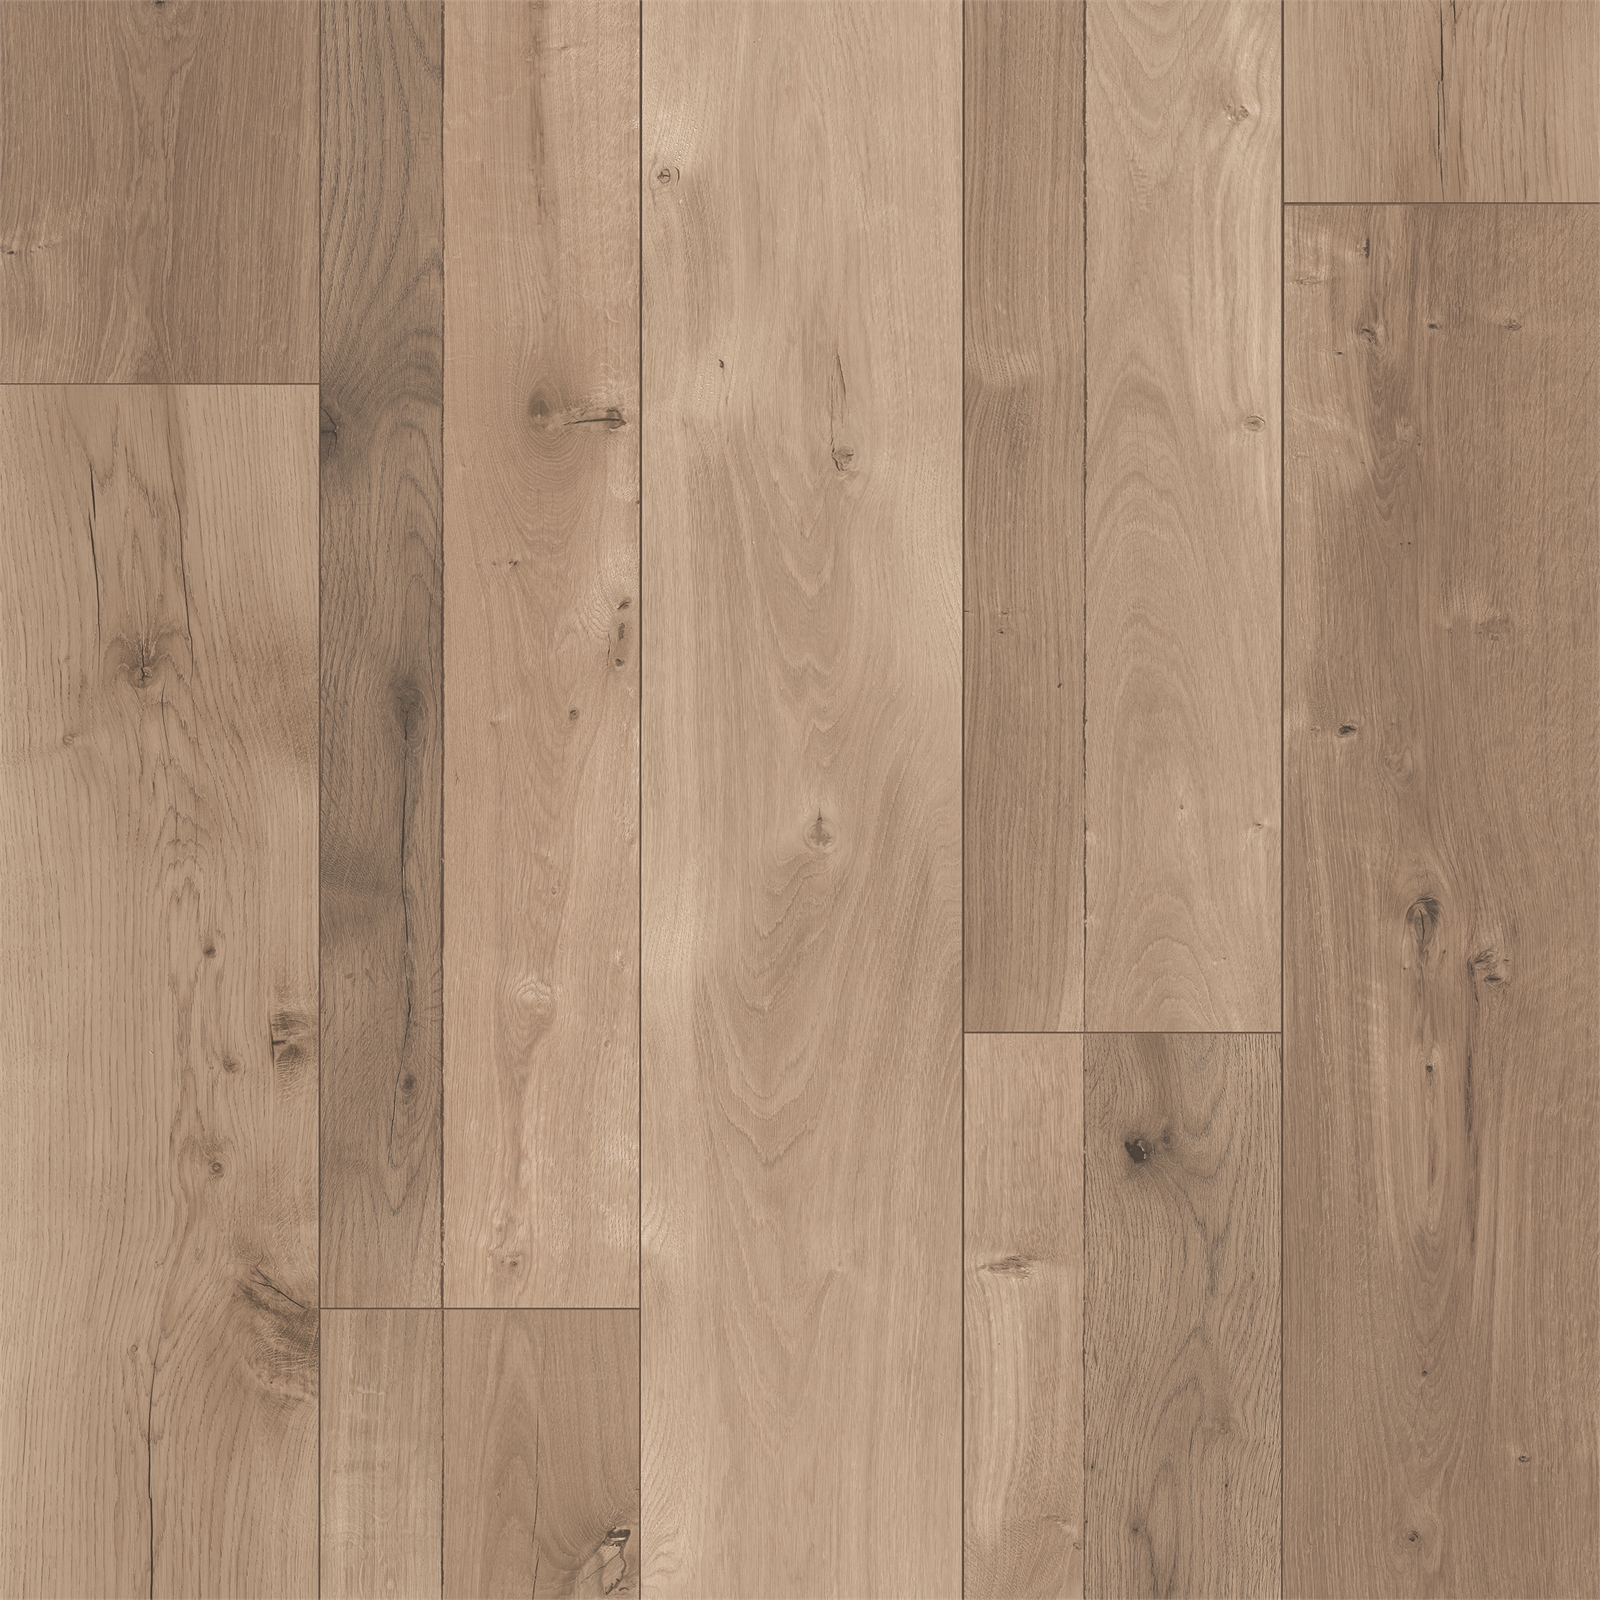 Formica 8mm 2.4sqm Trend Styled Oak Laminate Flooring